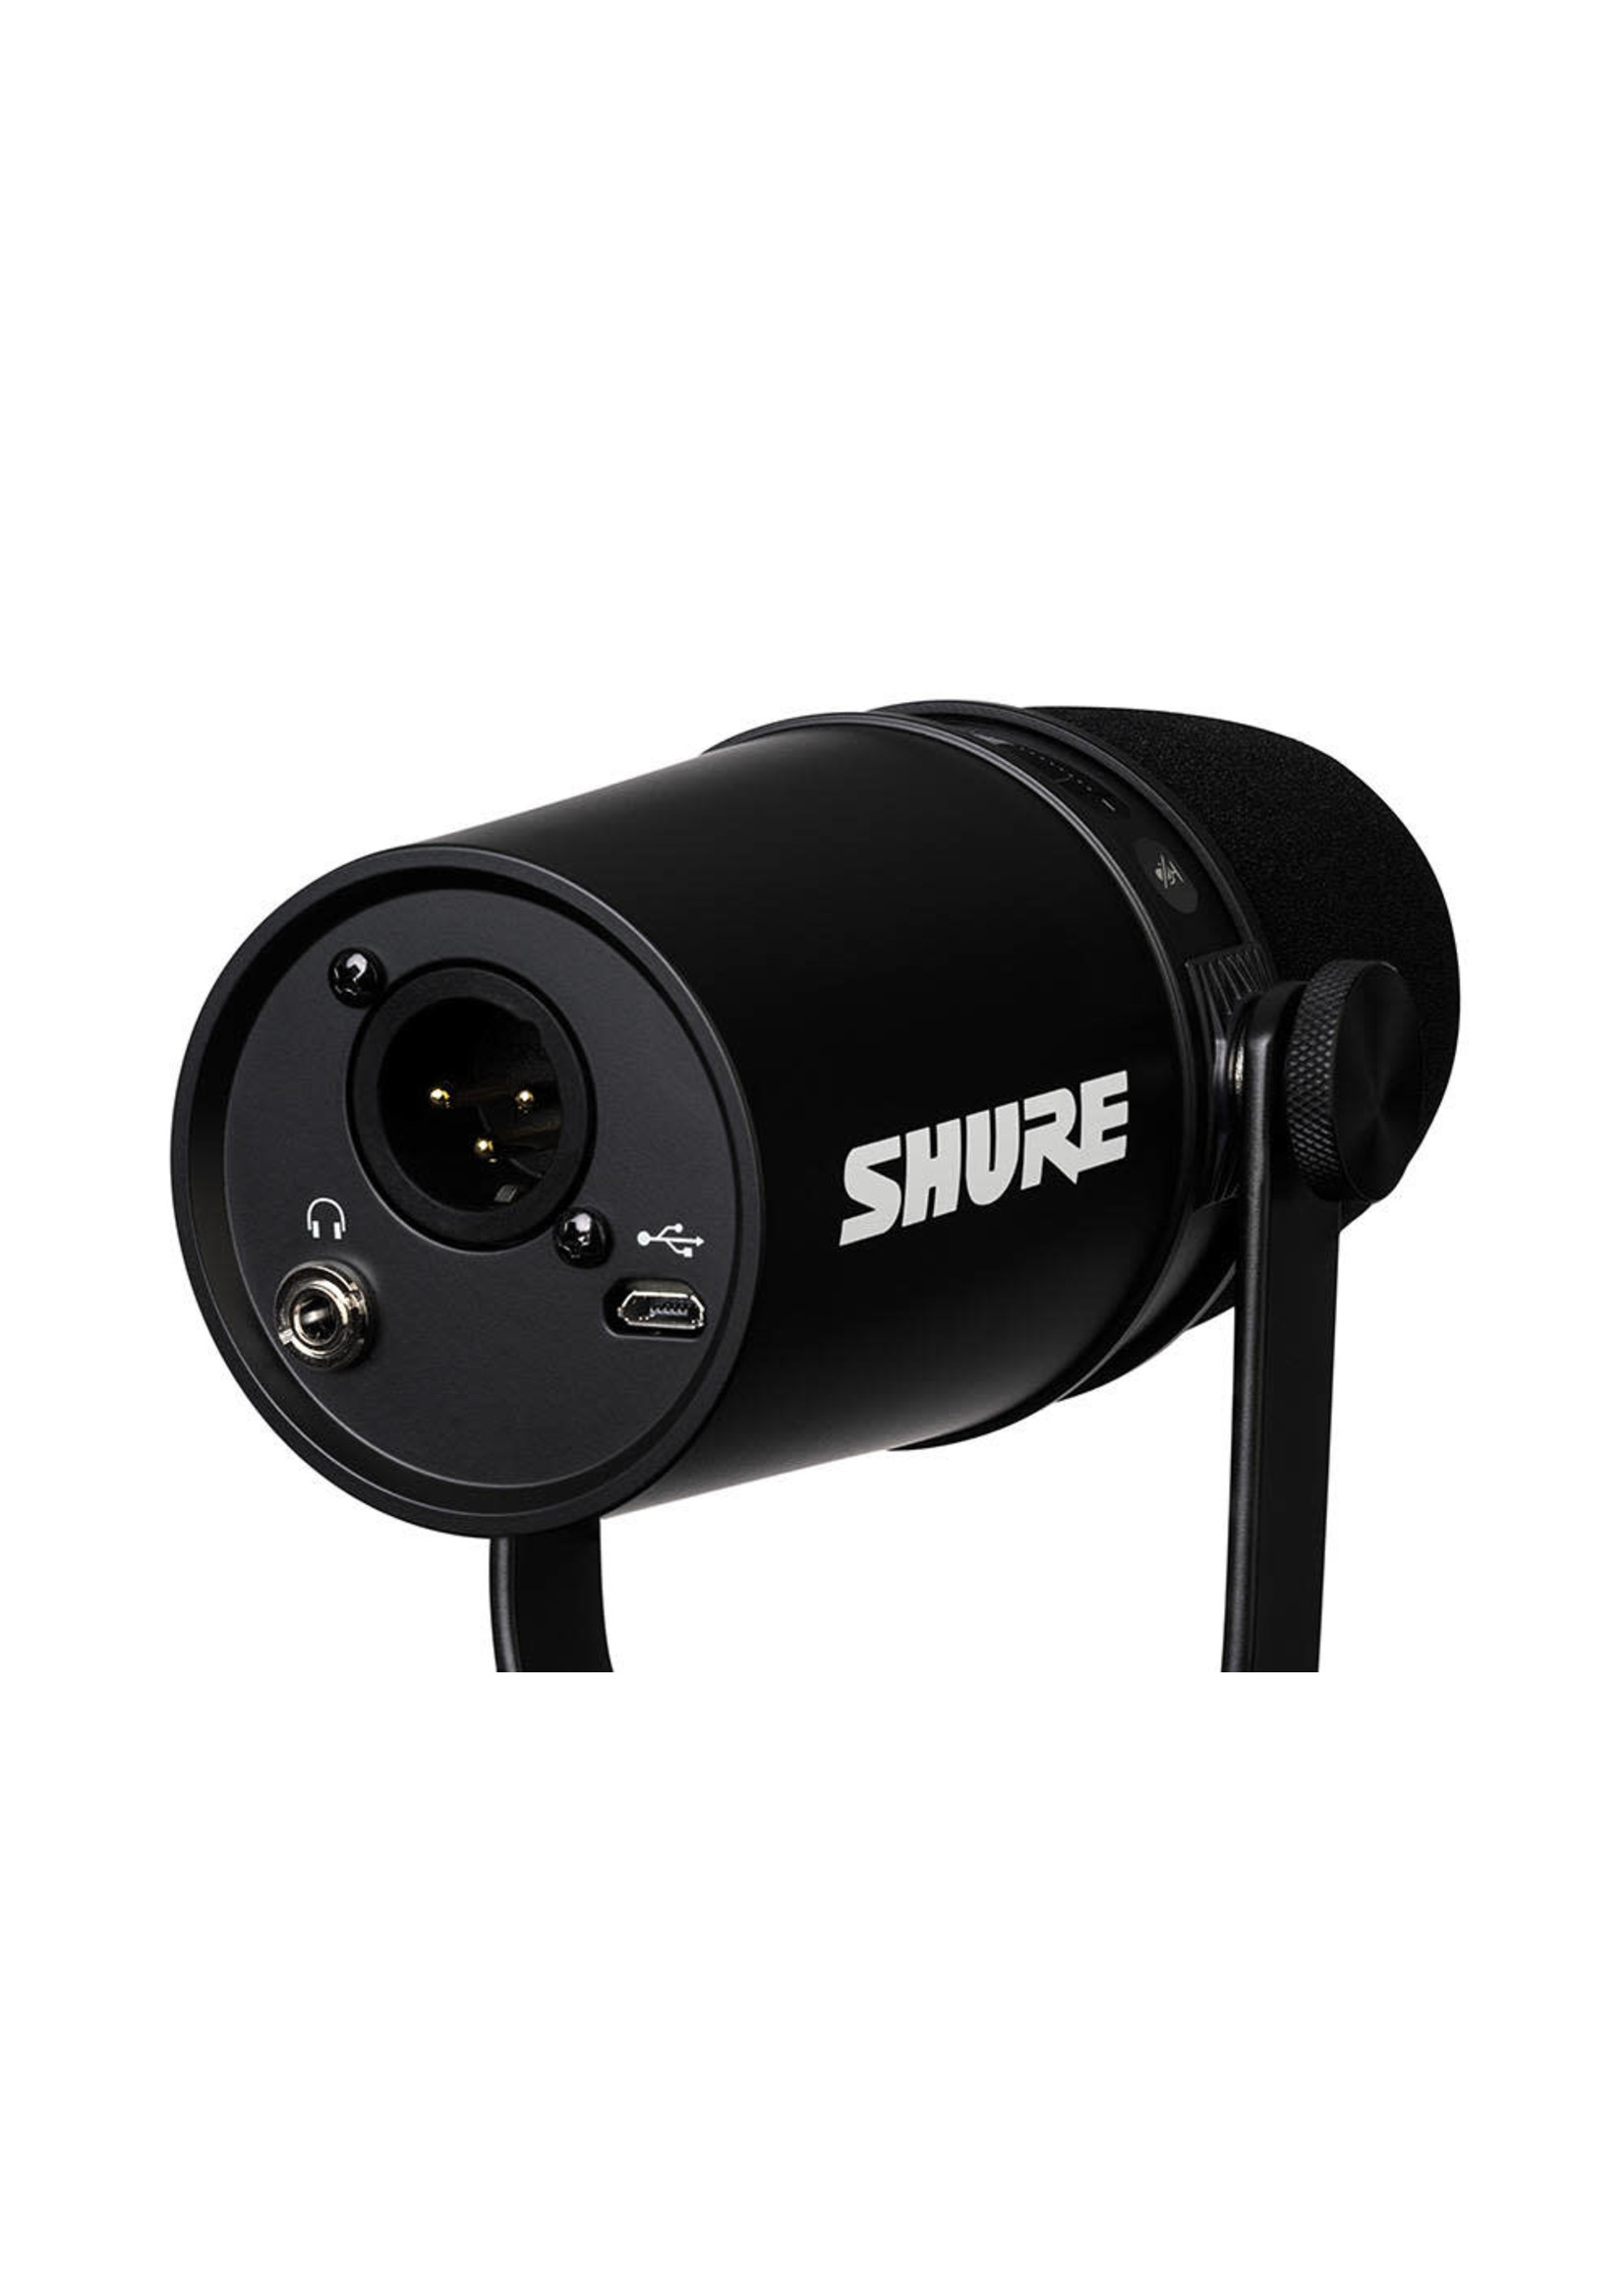 Shure Shure MV7 XLR/USB Dynamic Podcasting Microphone - Black